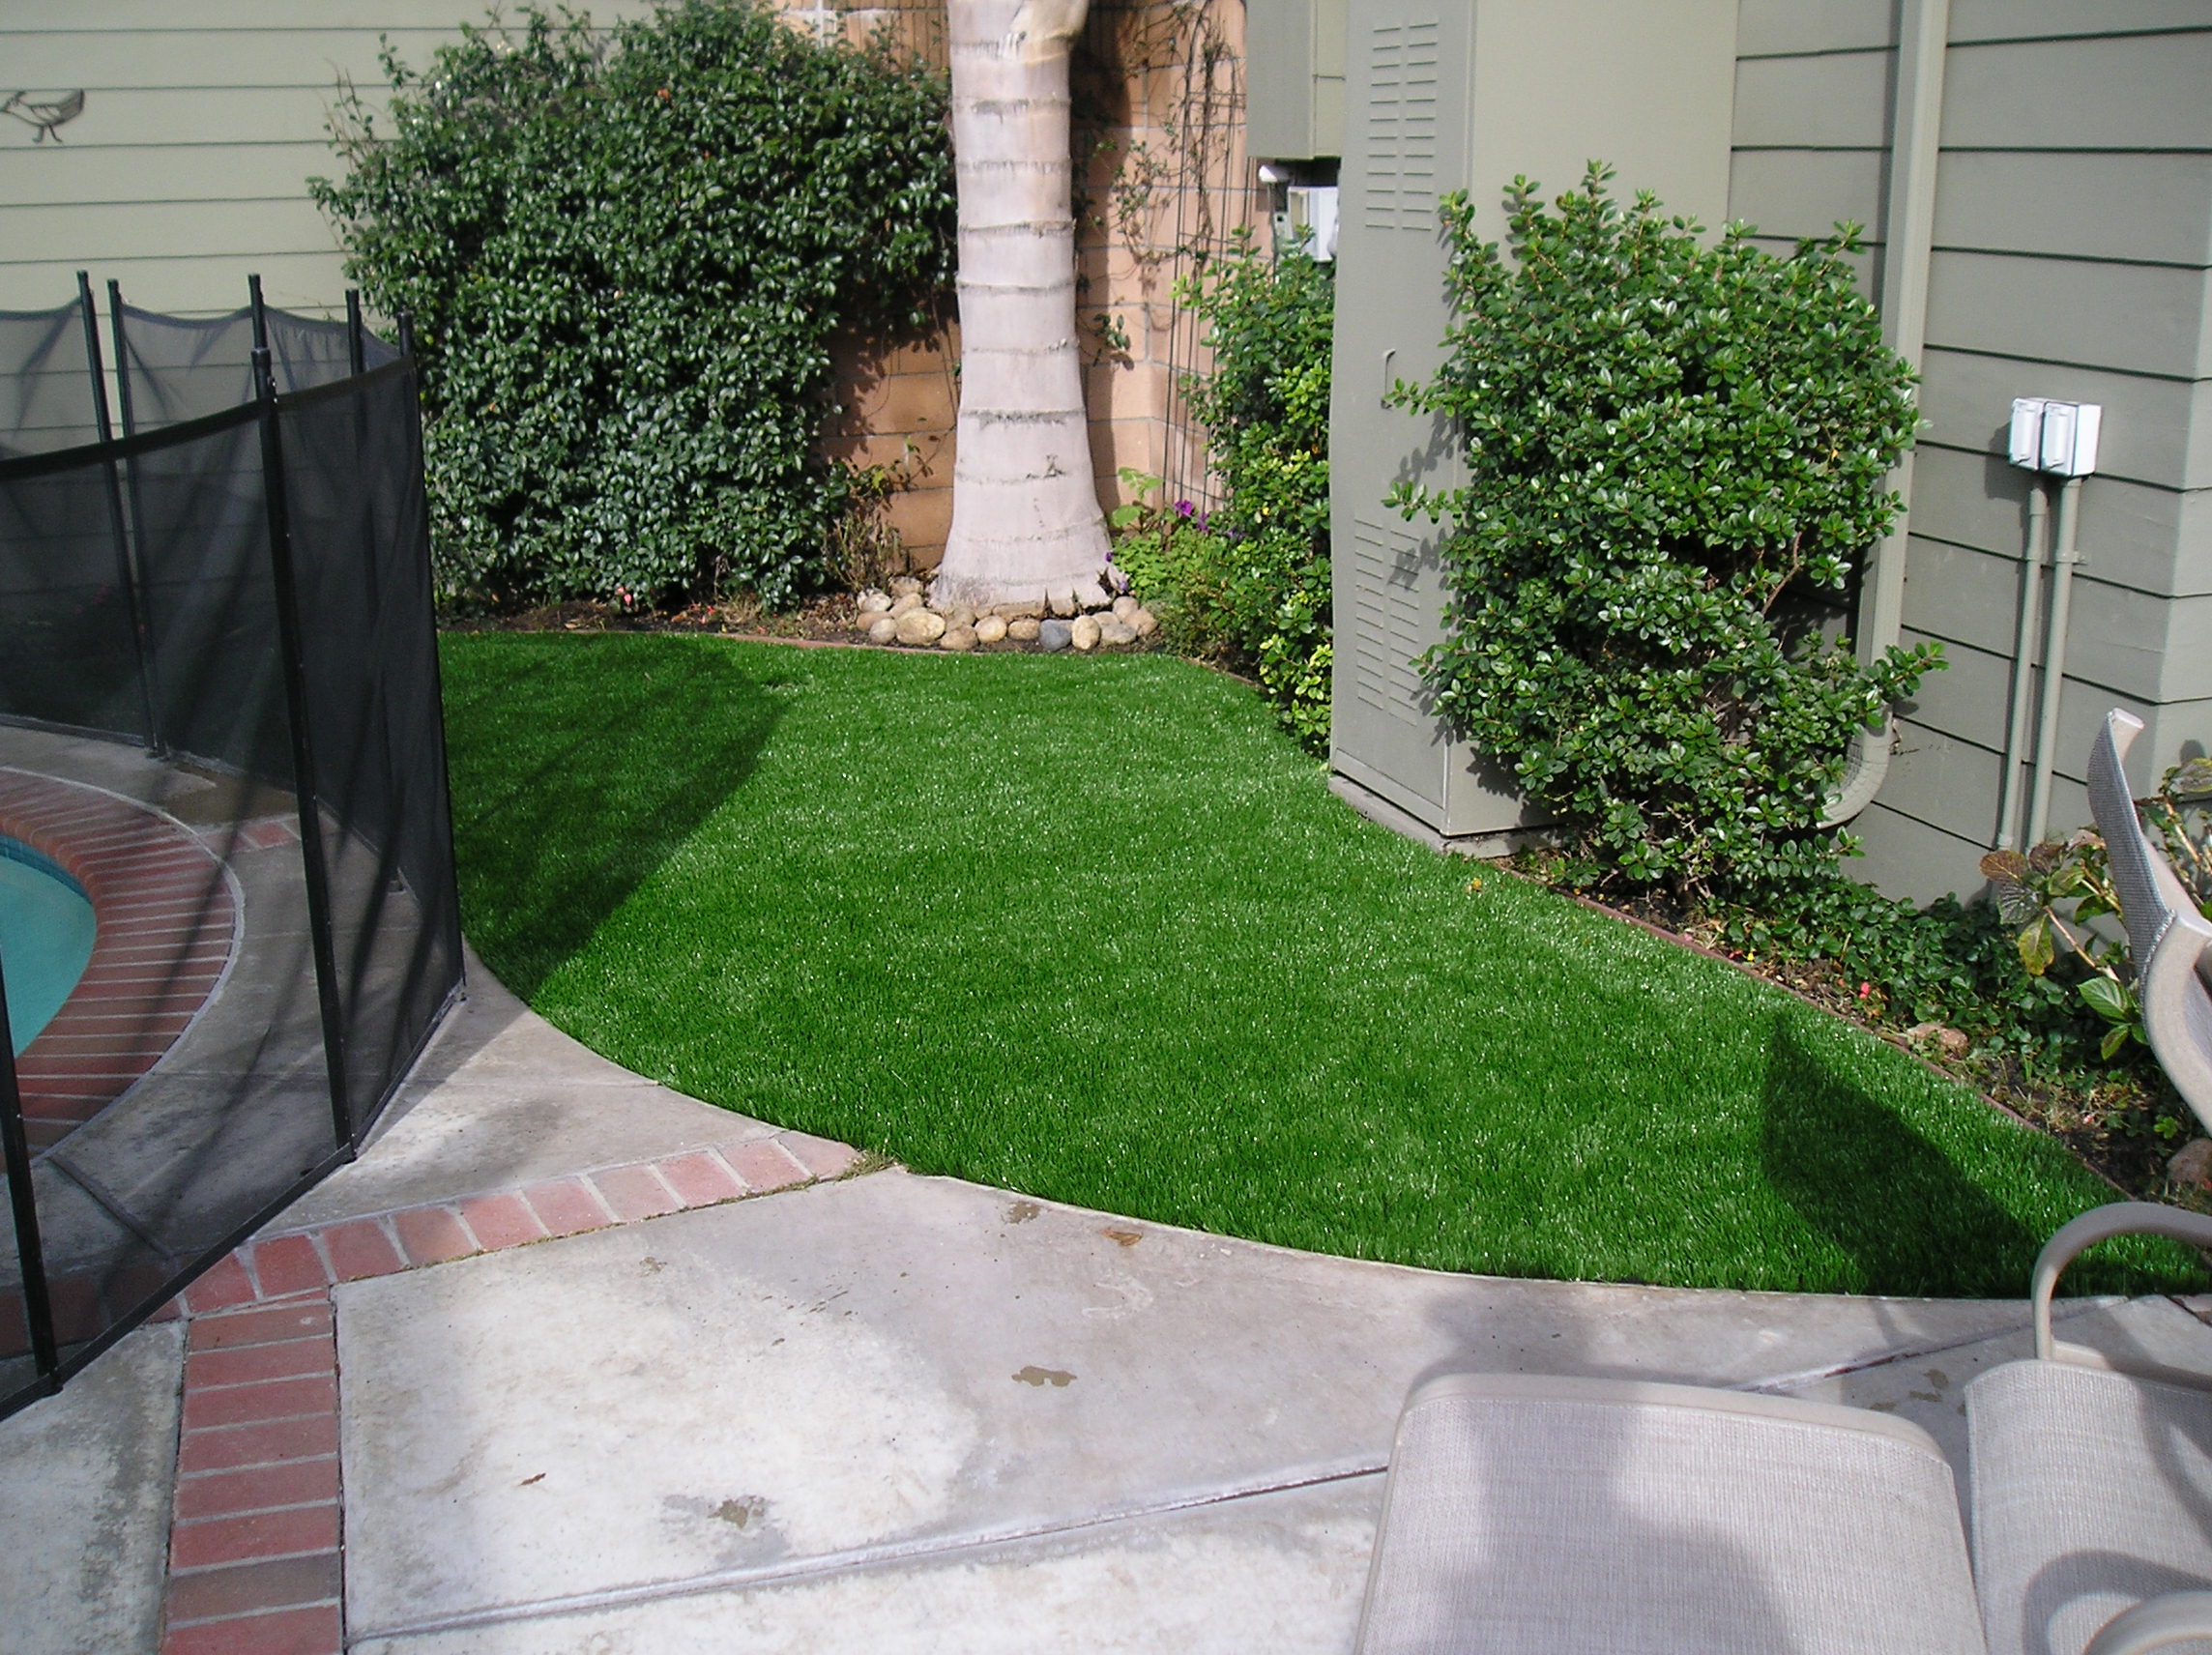 S Blade-90 fake grass for yard,backyard turf,turf backyard,turf yard,fake grass for backyard,used artificial turf